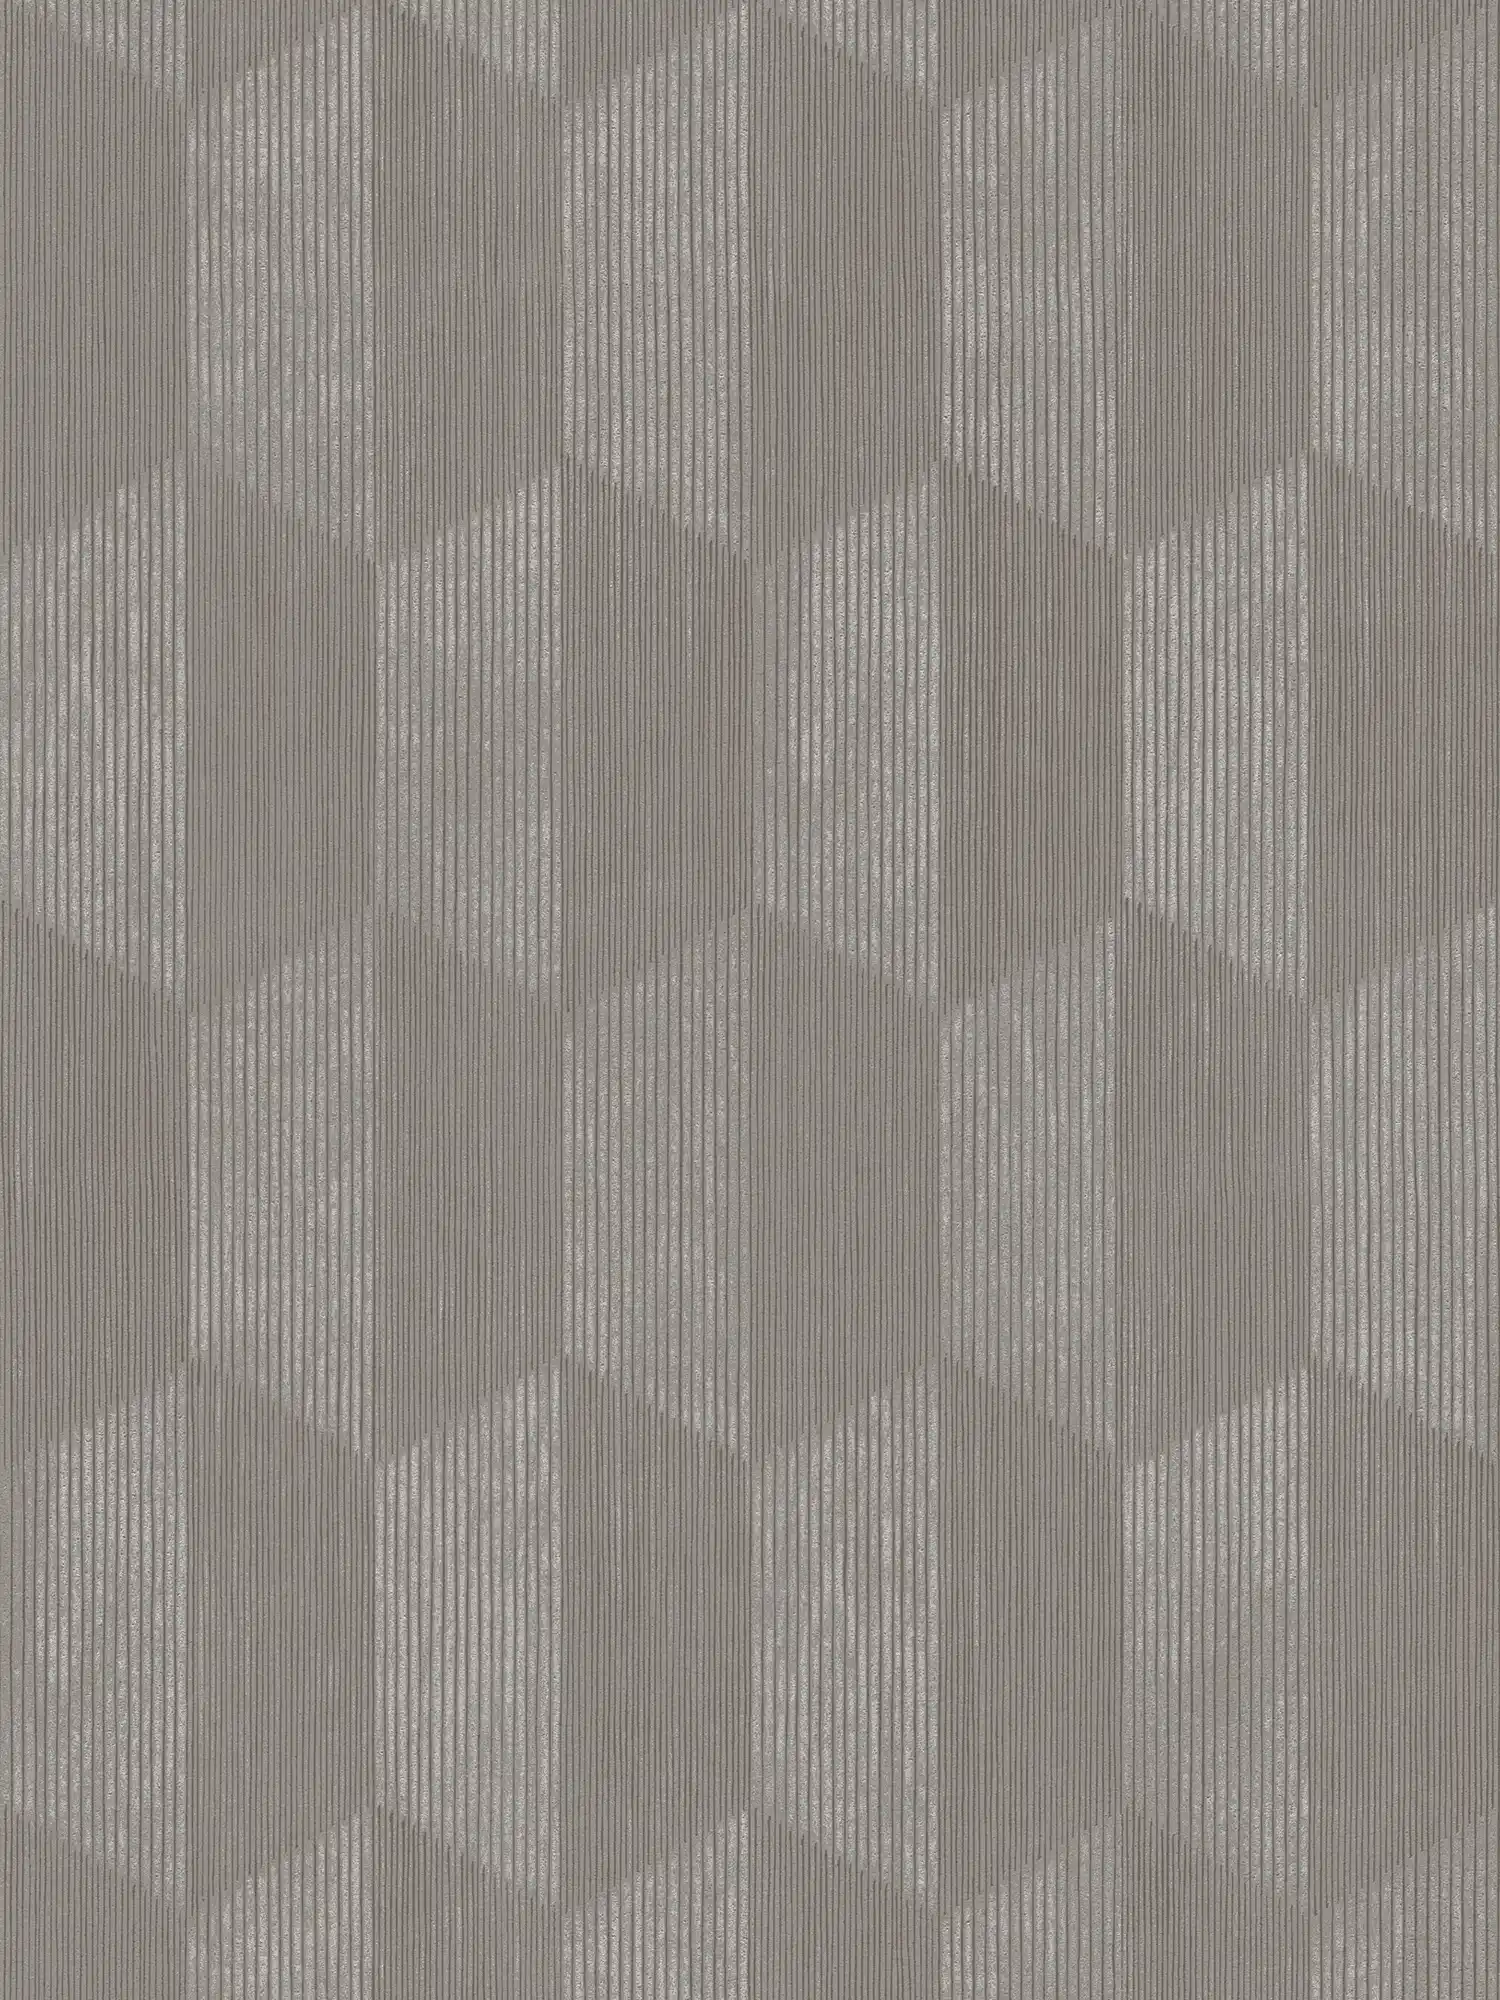 Strukturtapete mit 3D Grafik Muster – Grau, Beige
